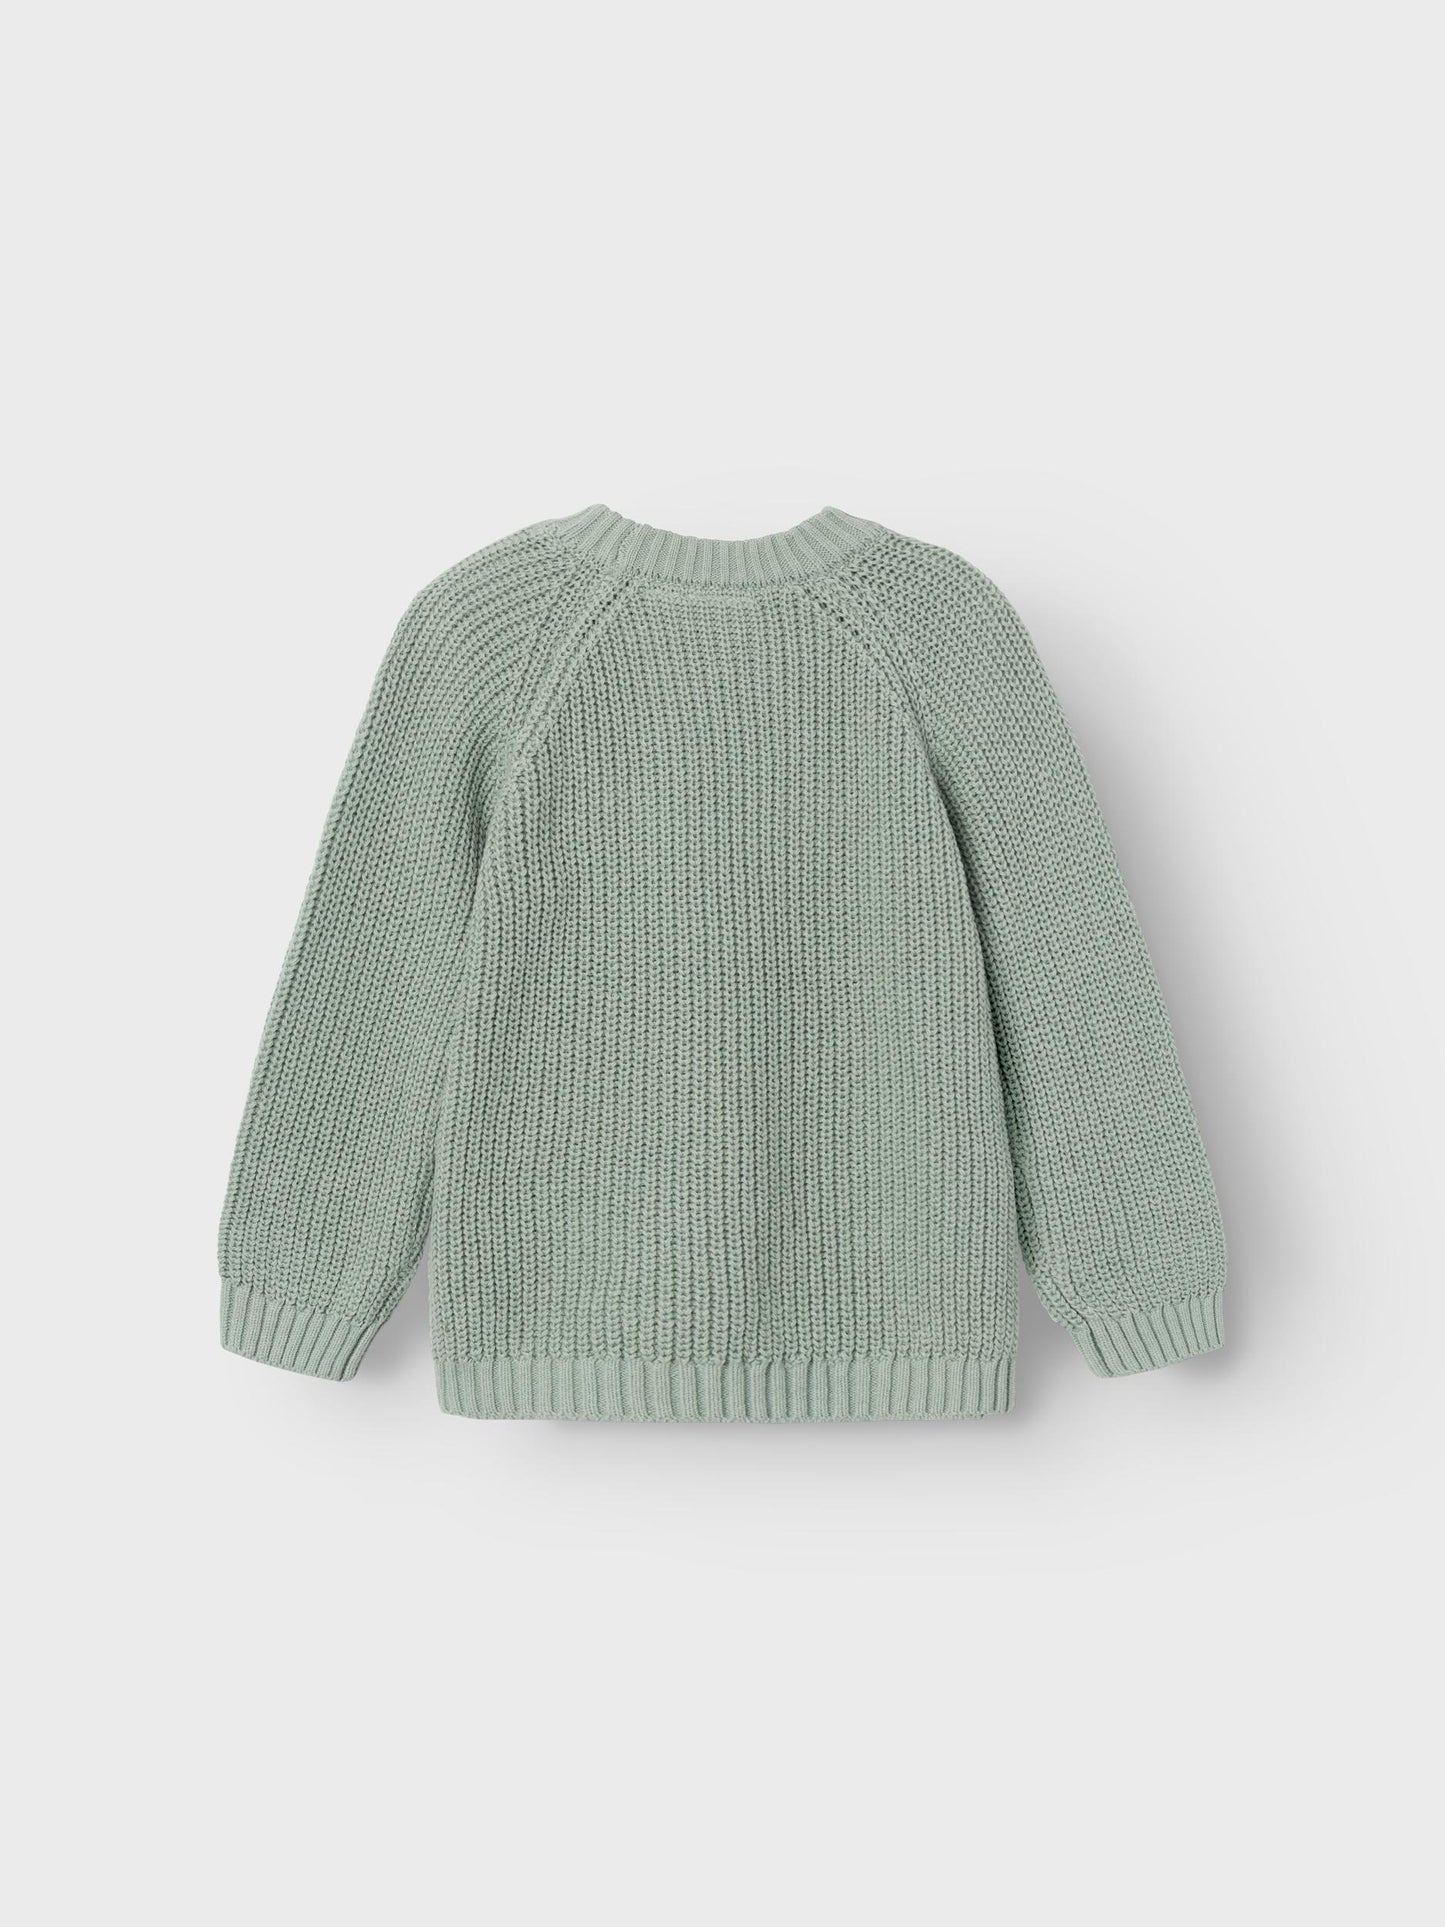 Lil atelier - knitted sweater - Jadeite